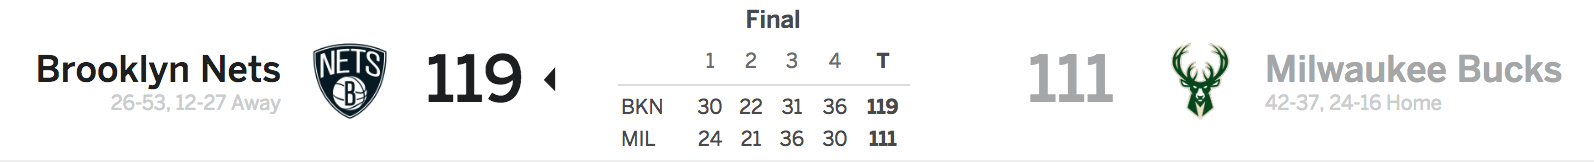 Brooklyn Nets at Milwaukee Bucks 4-5-18 Score